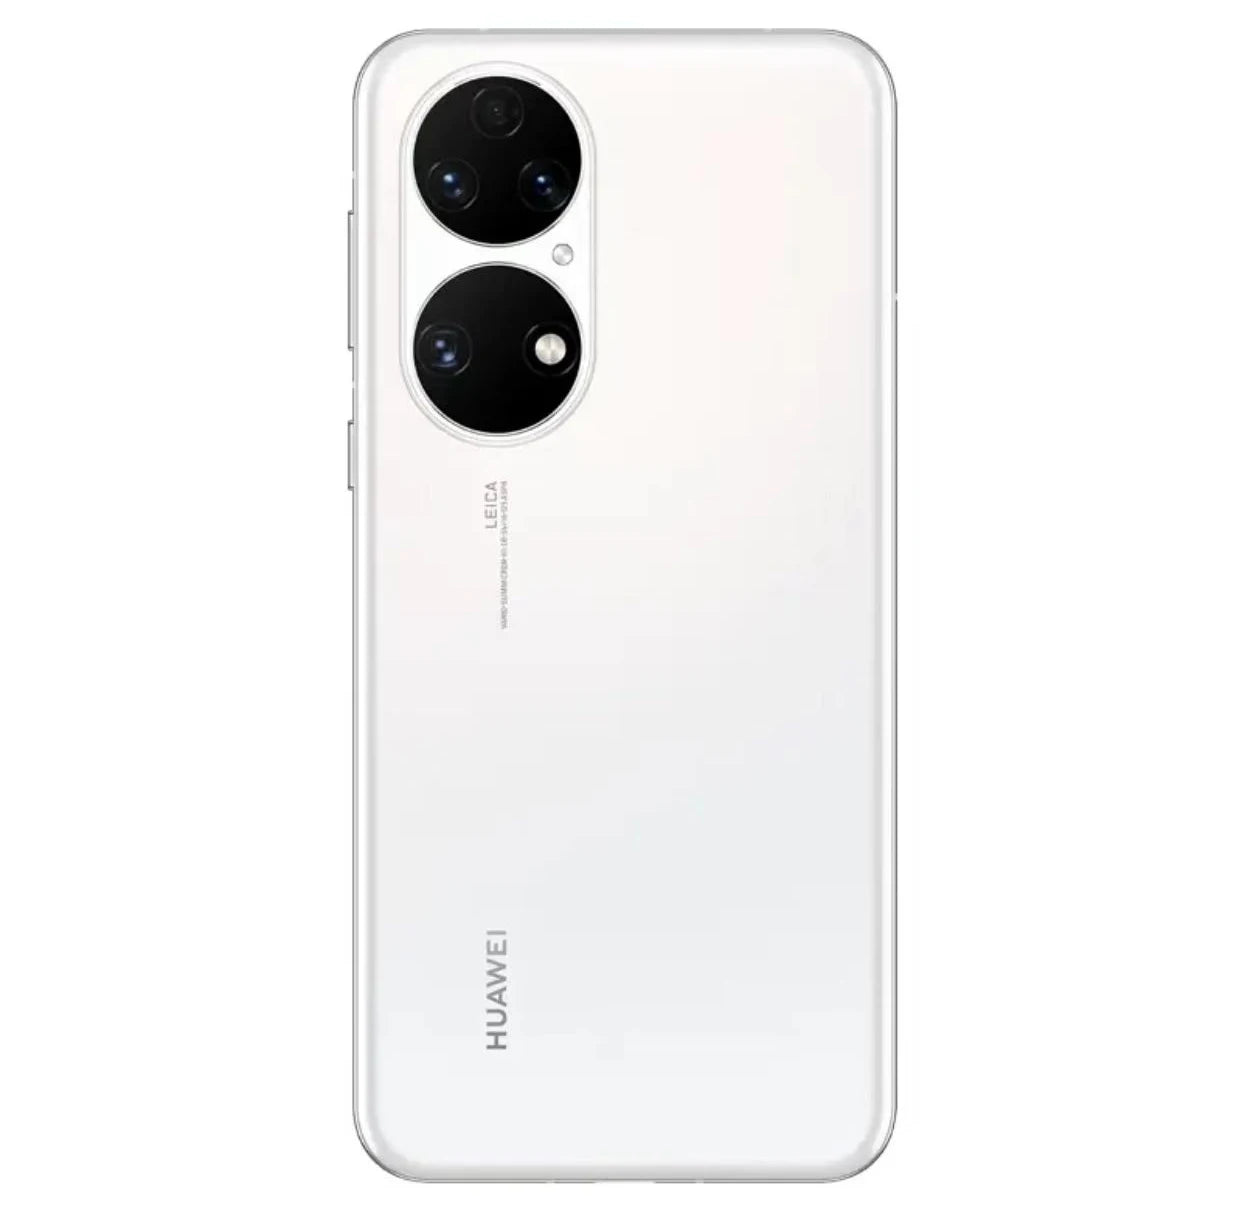 Original Offical New Huawei P50E 4G Mobile Phone 6.5 inch 90Hz Snapdragon 778G 50MP Main Camera 4100mAh 66W SuperCharge OTA NFC